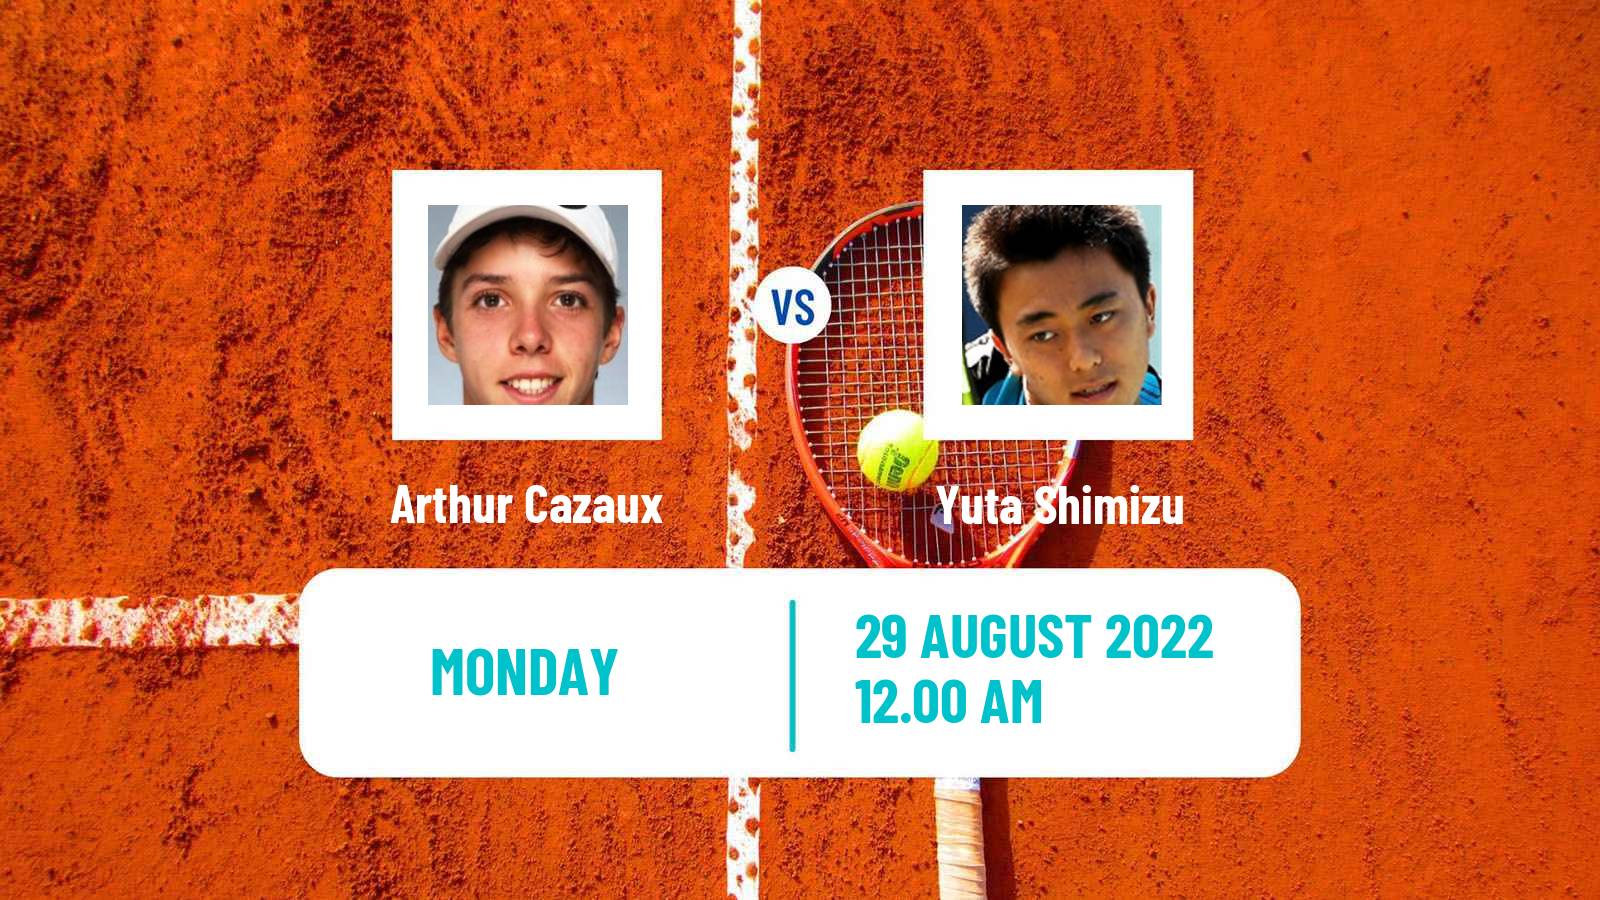 Tennis ATP Challenger Arthur Cazaux - Yuta Shimizu